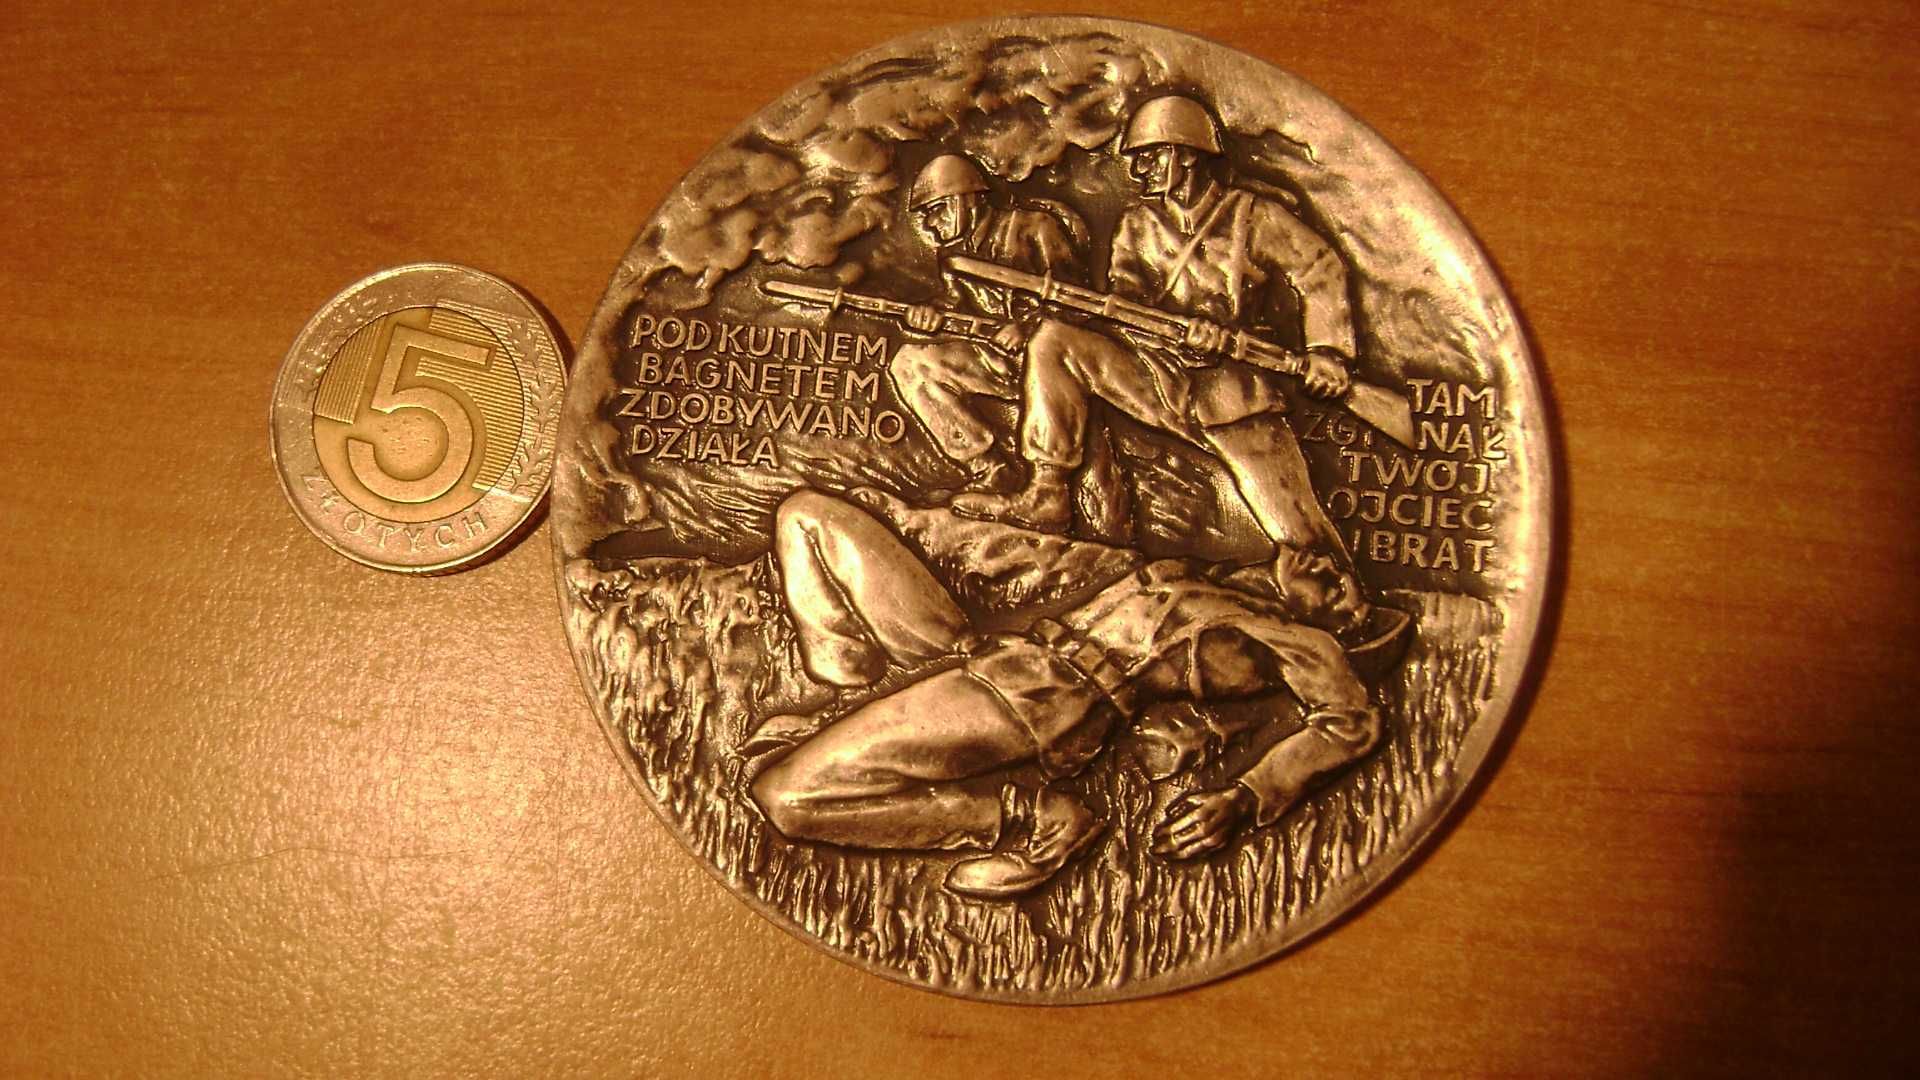 Starocie z PRL - Militaria = Medal Wojskowy numer 15 do rozpoznania